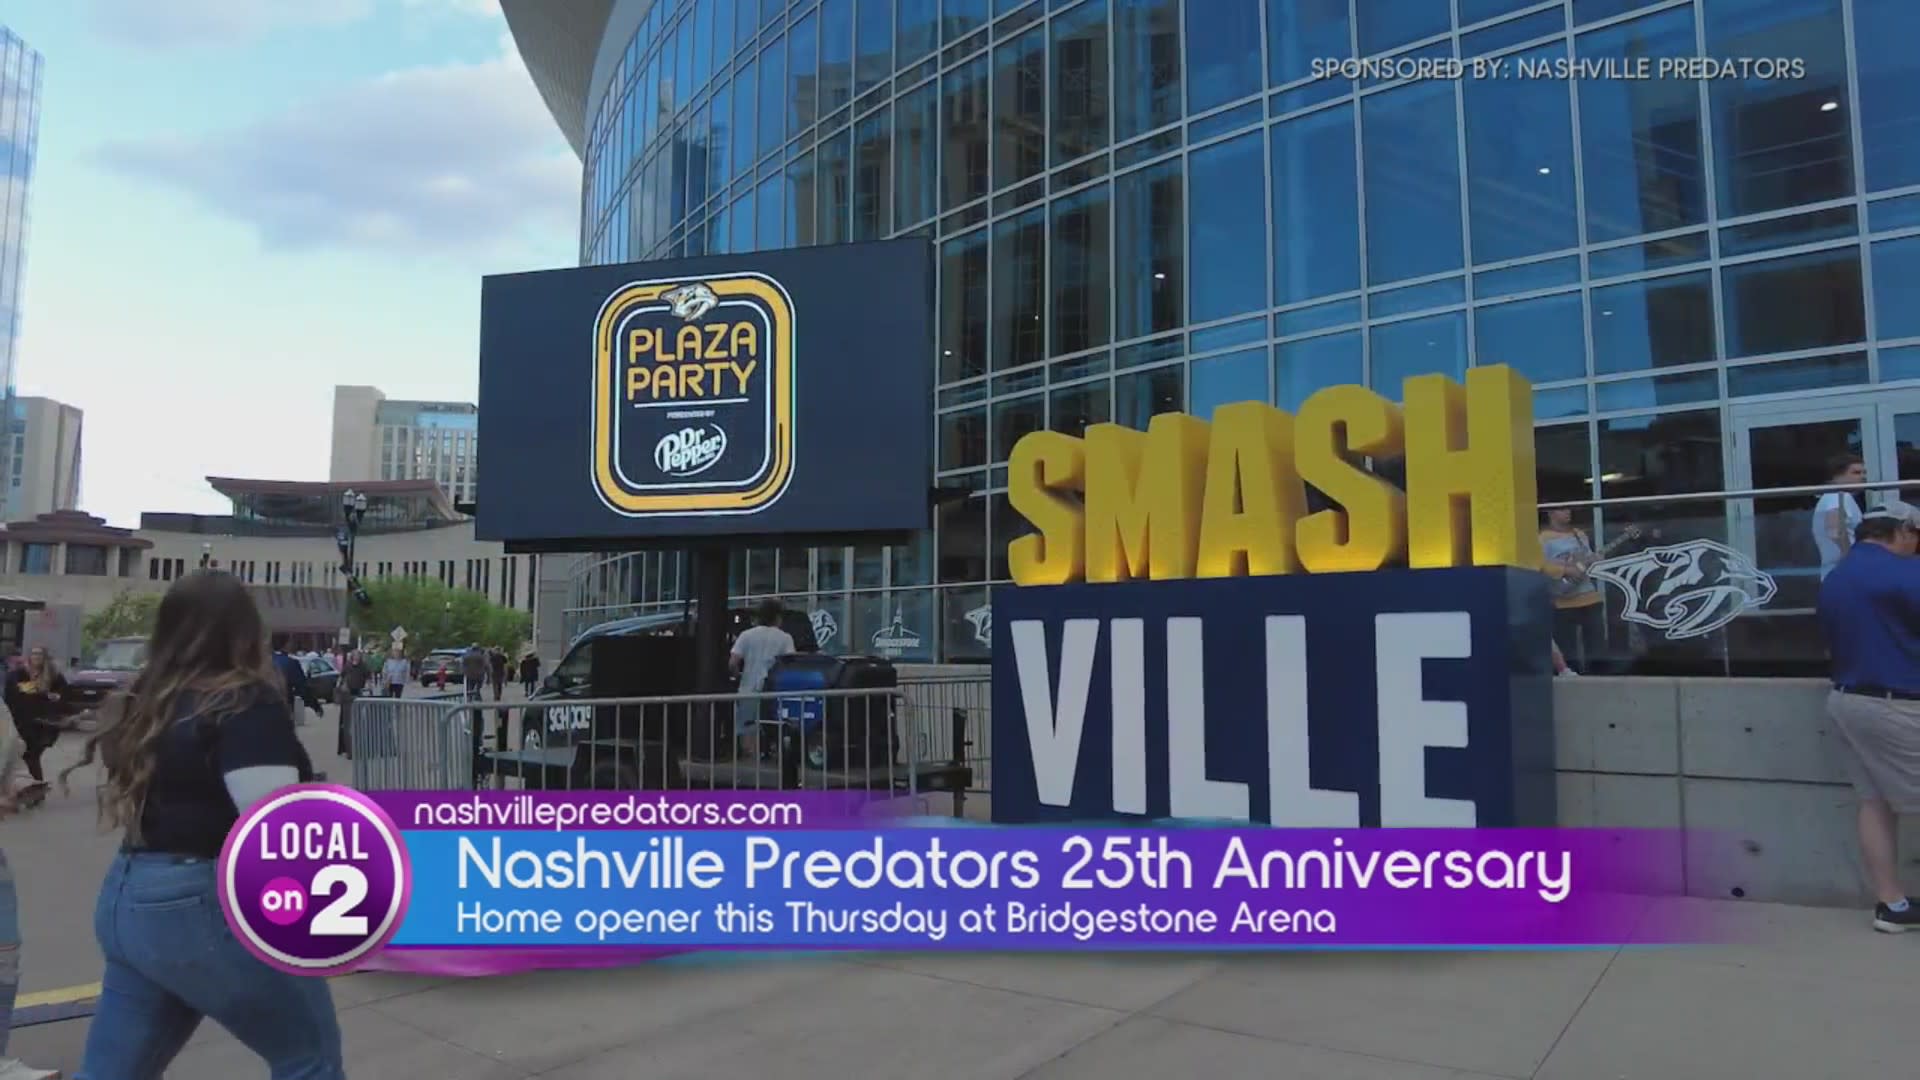 Nashville Predators - The White Out returns to Smashville on Jan